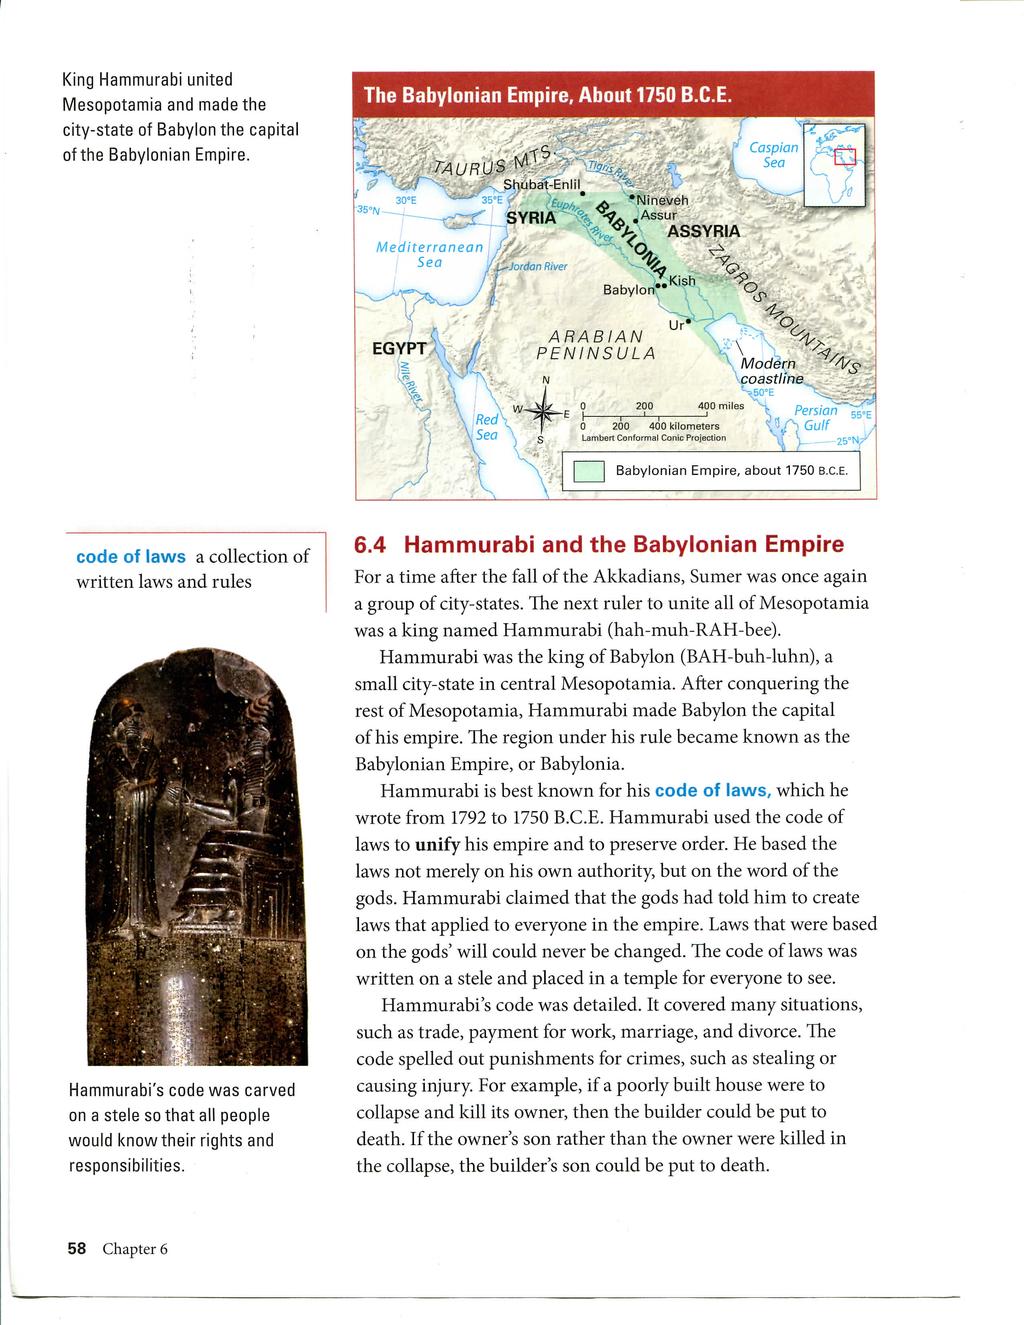 King Hammurabi united iviesopotamia and made the city-state of Babylon the capital of the Babylonian Empire. The Babylonian Empire, About 1750 B.C.E. Caspian Sea Mediterranean Sea SYRIA '''"^ Jordan River /i "^Nineveh.